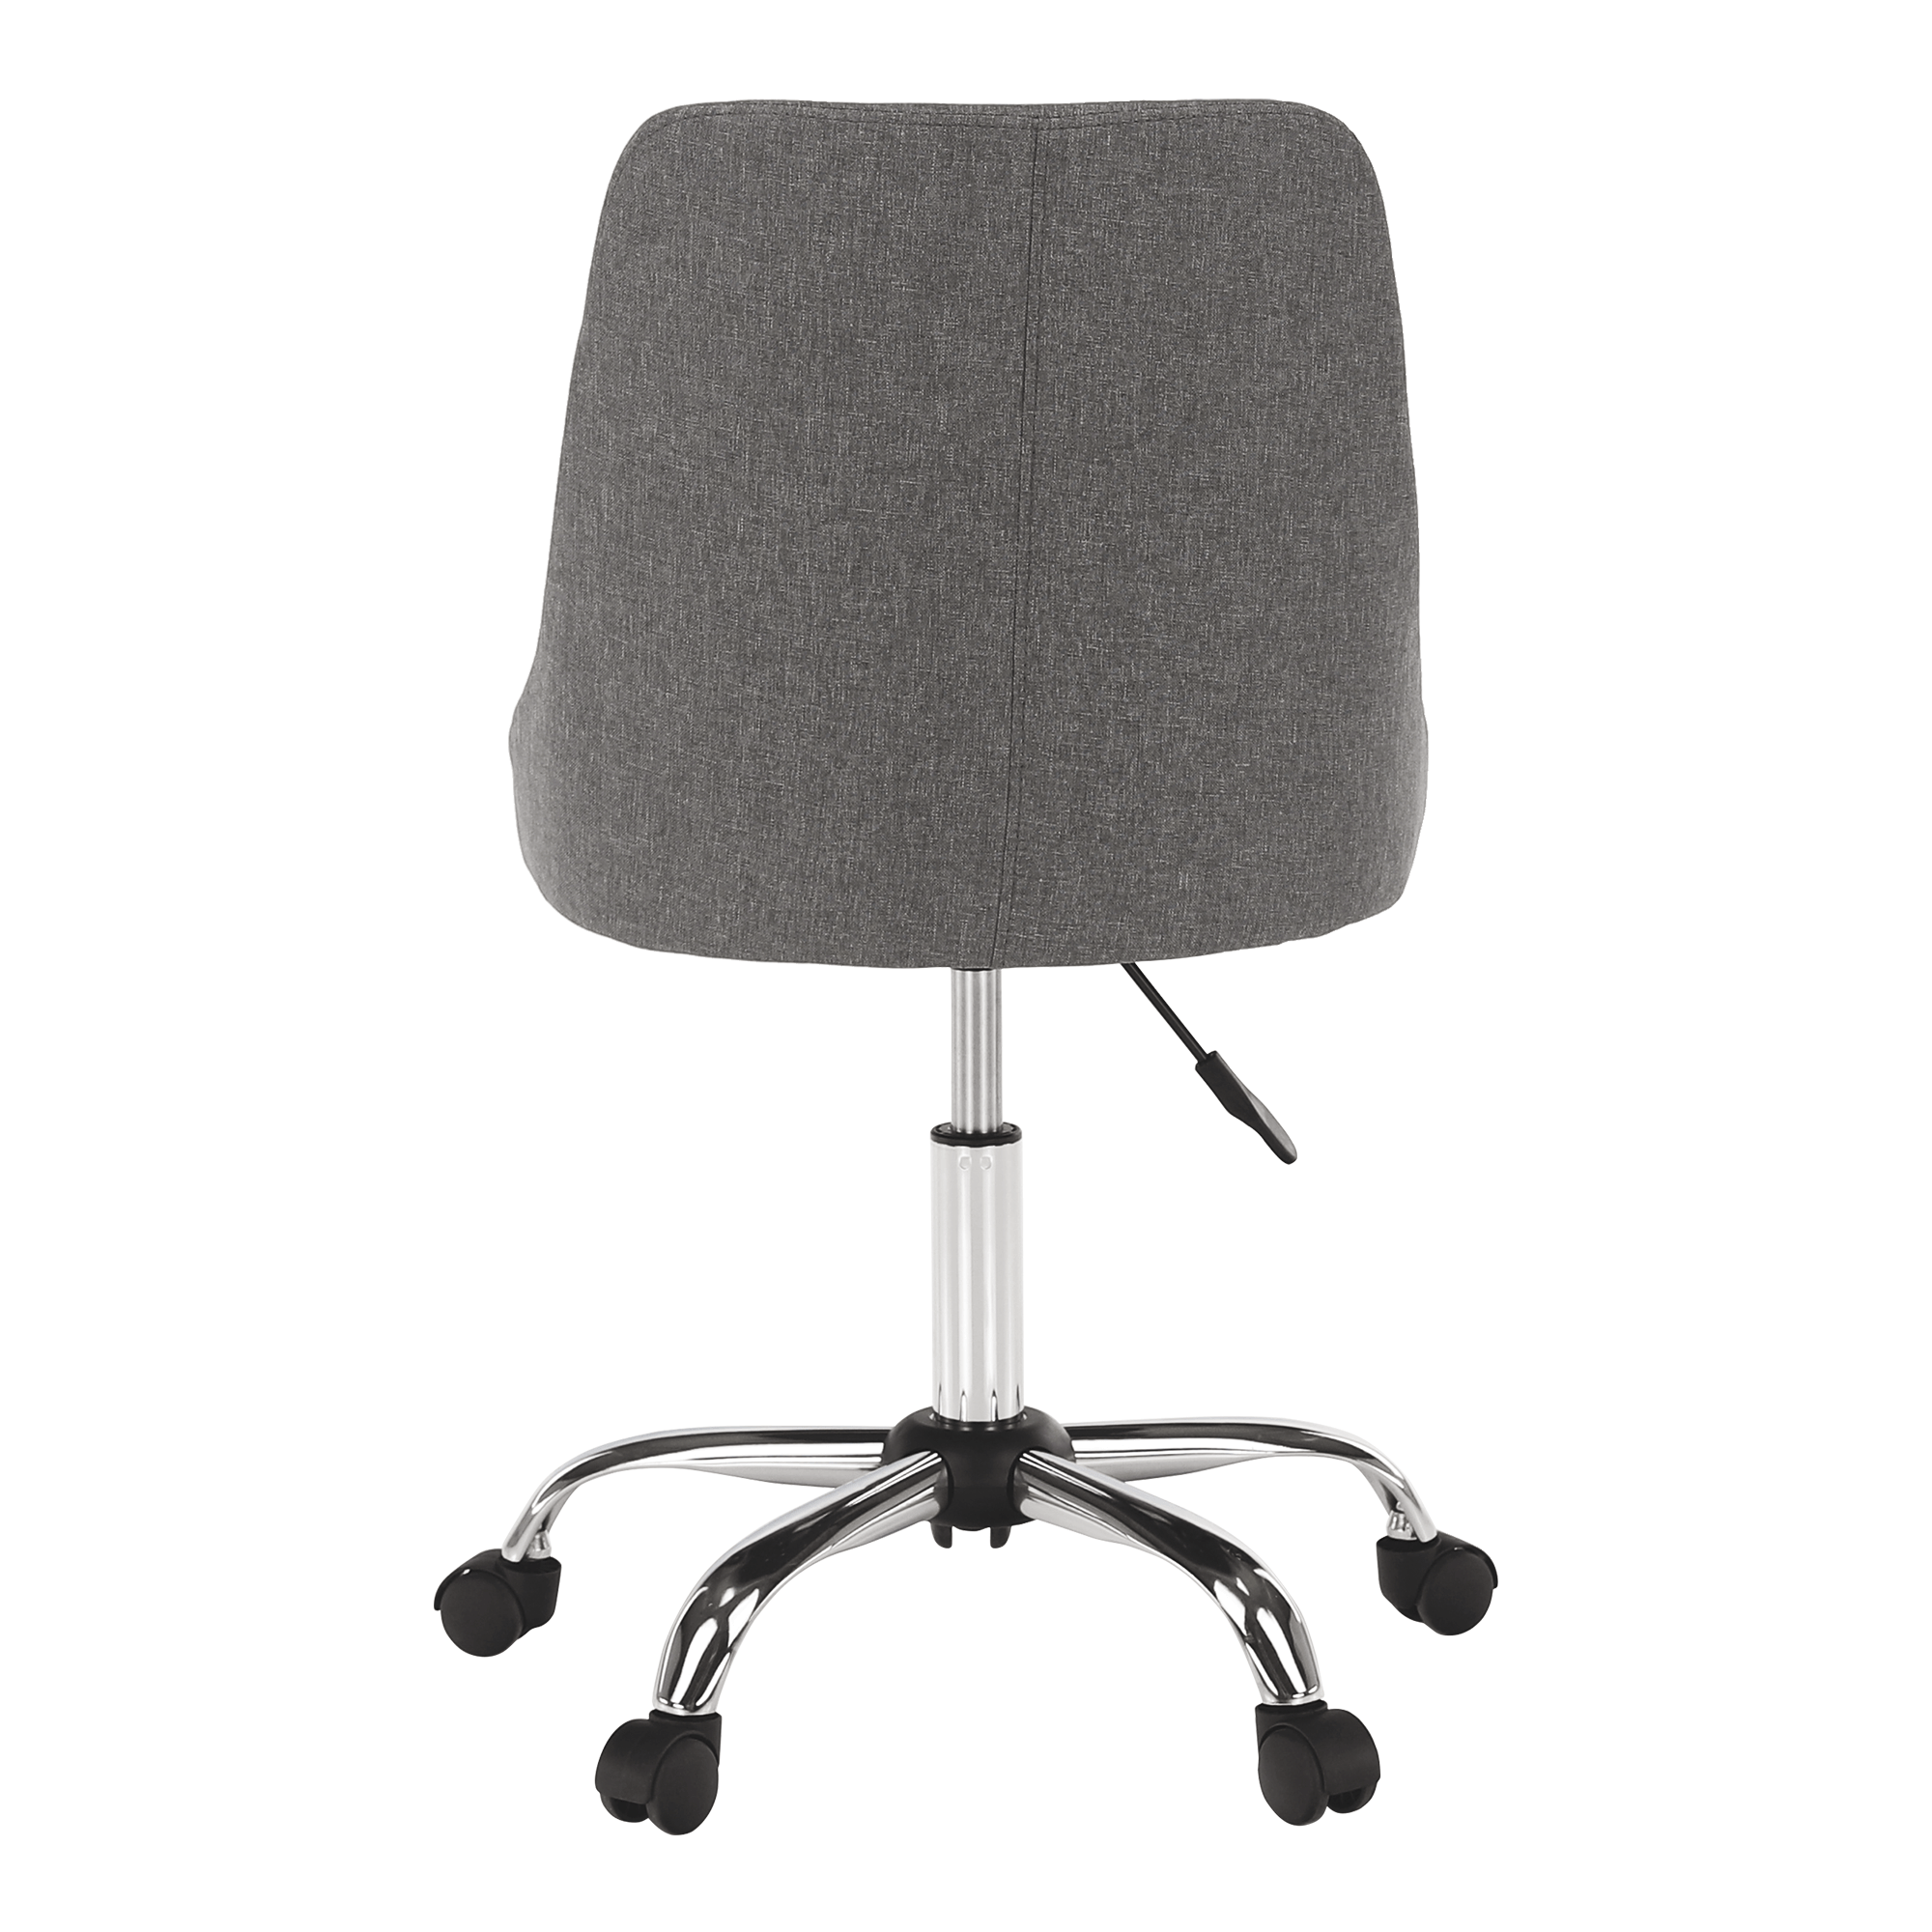 Kancelářská židle, šedá / chrom, Ediz